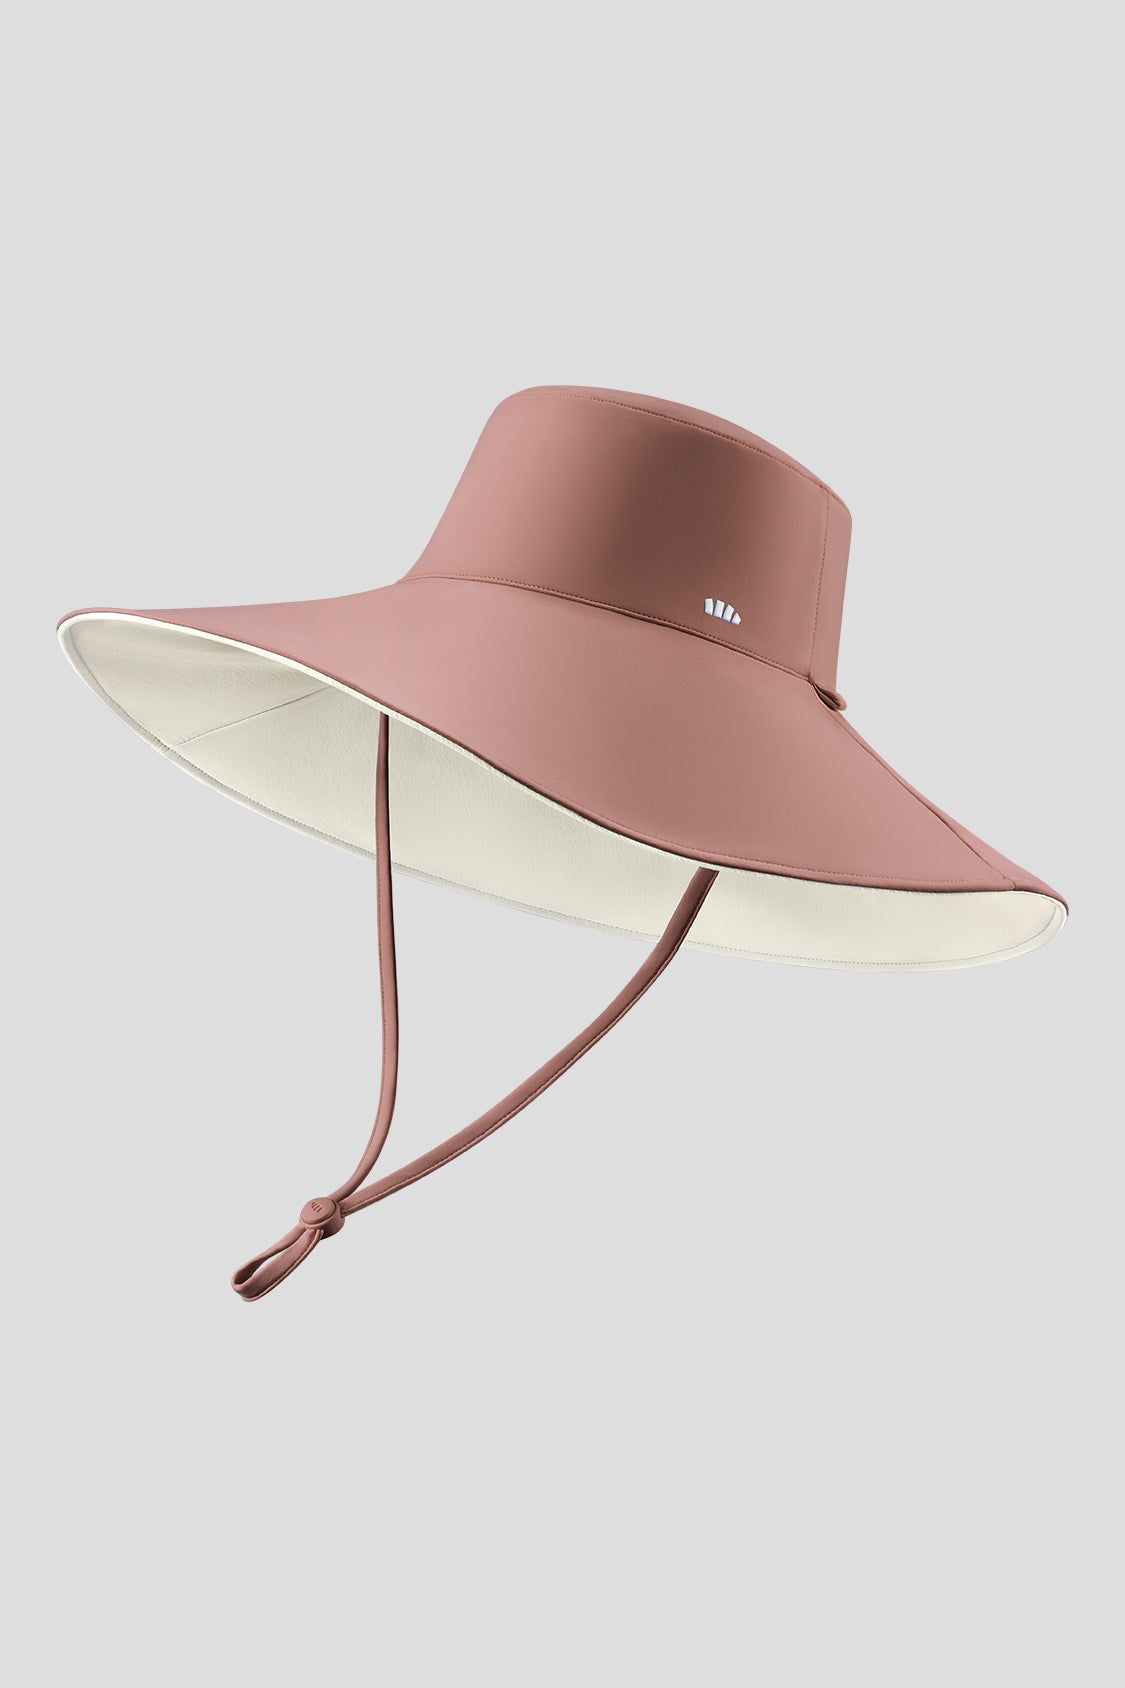 beneunder women's sun hats upf50+ #color_tea wood brown -white